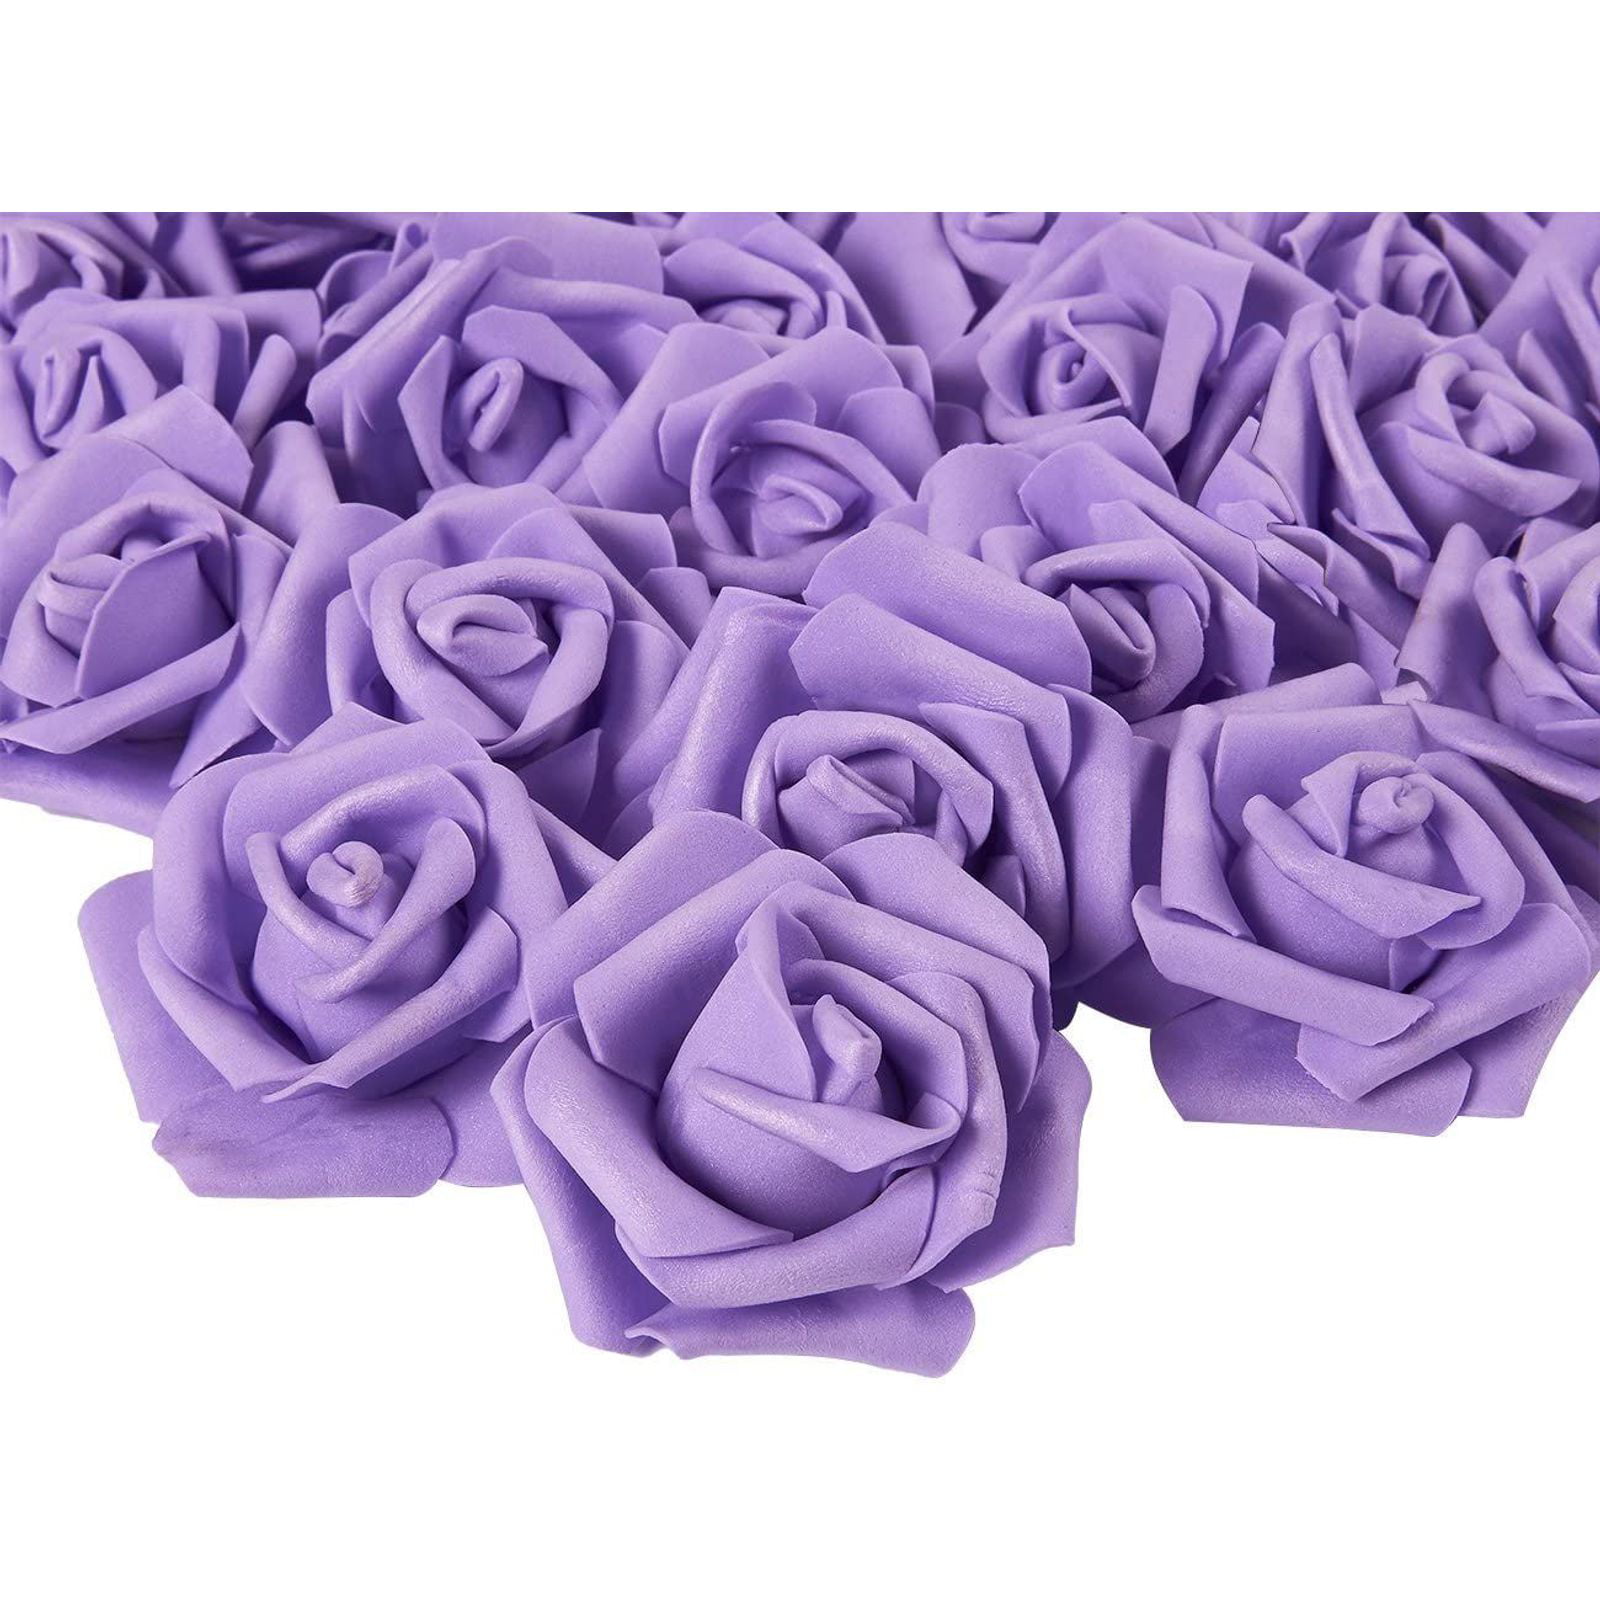 Deep pink and purple 2 x 11 Stems Artificial Rose Silk Flower Wedding Flowers 